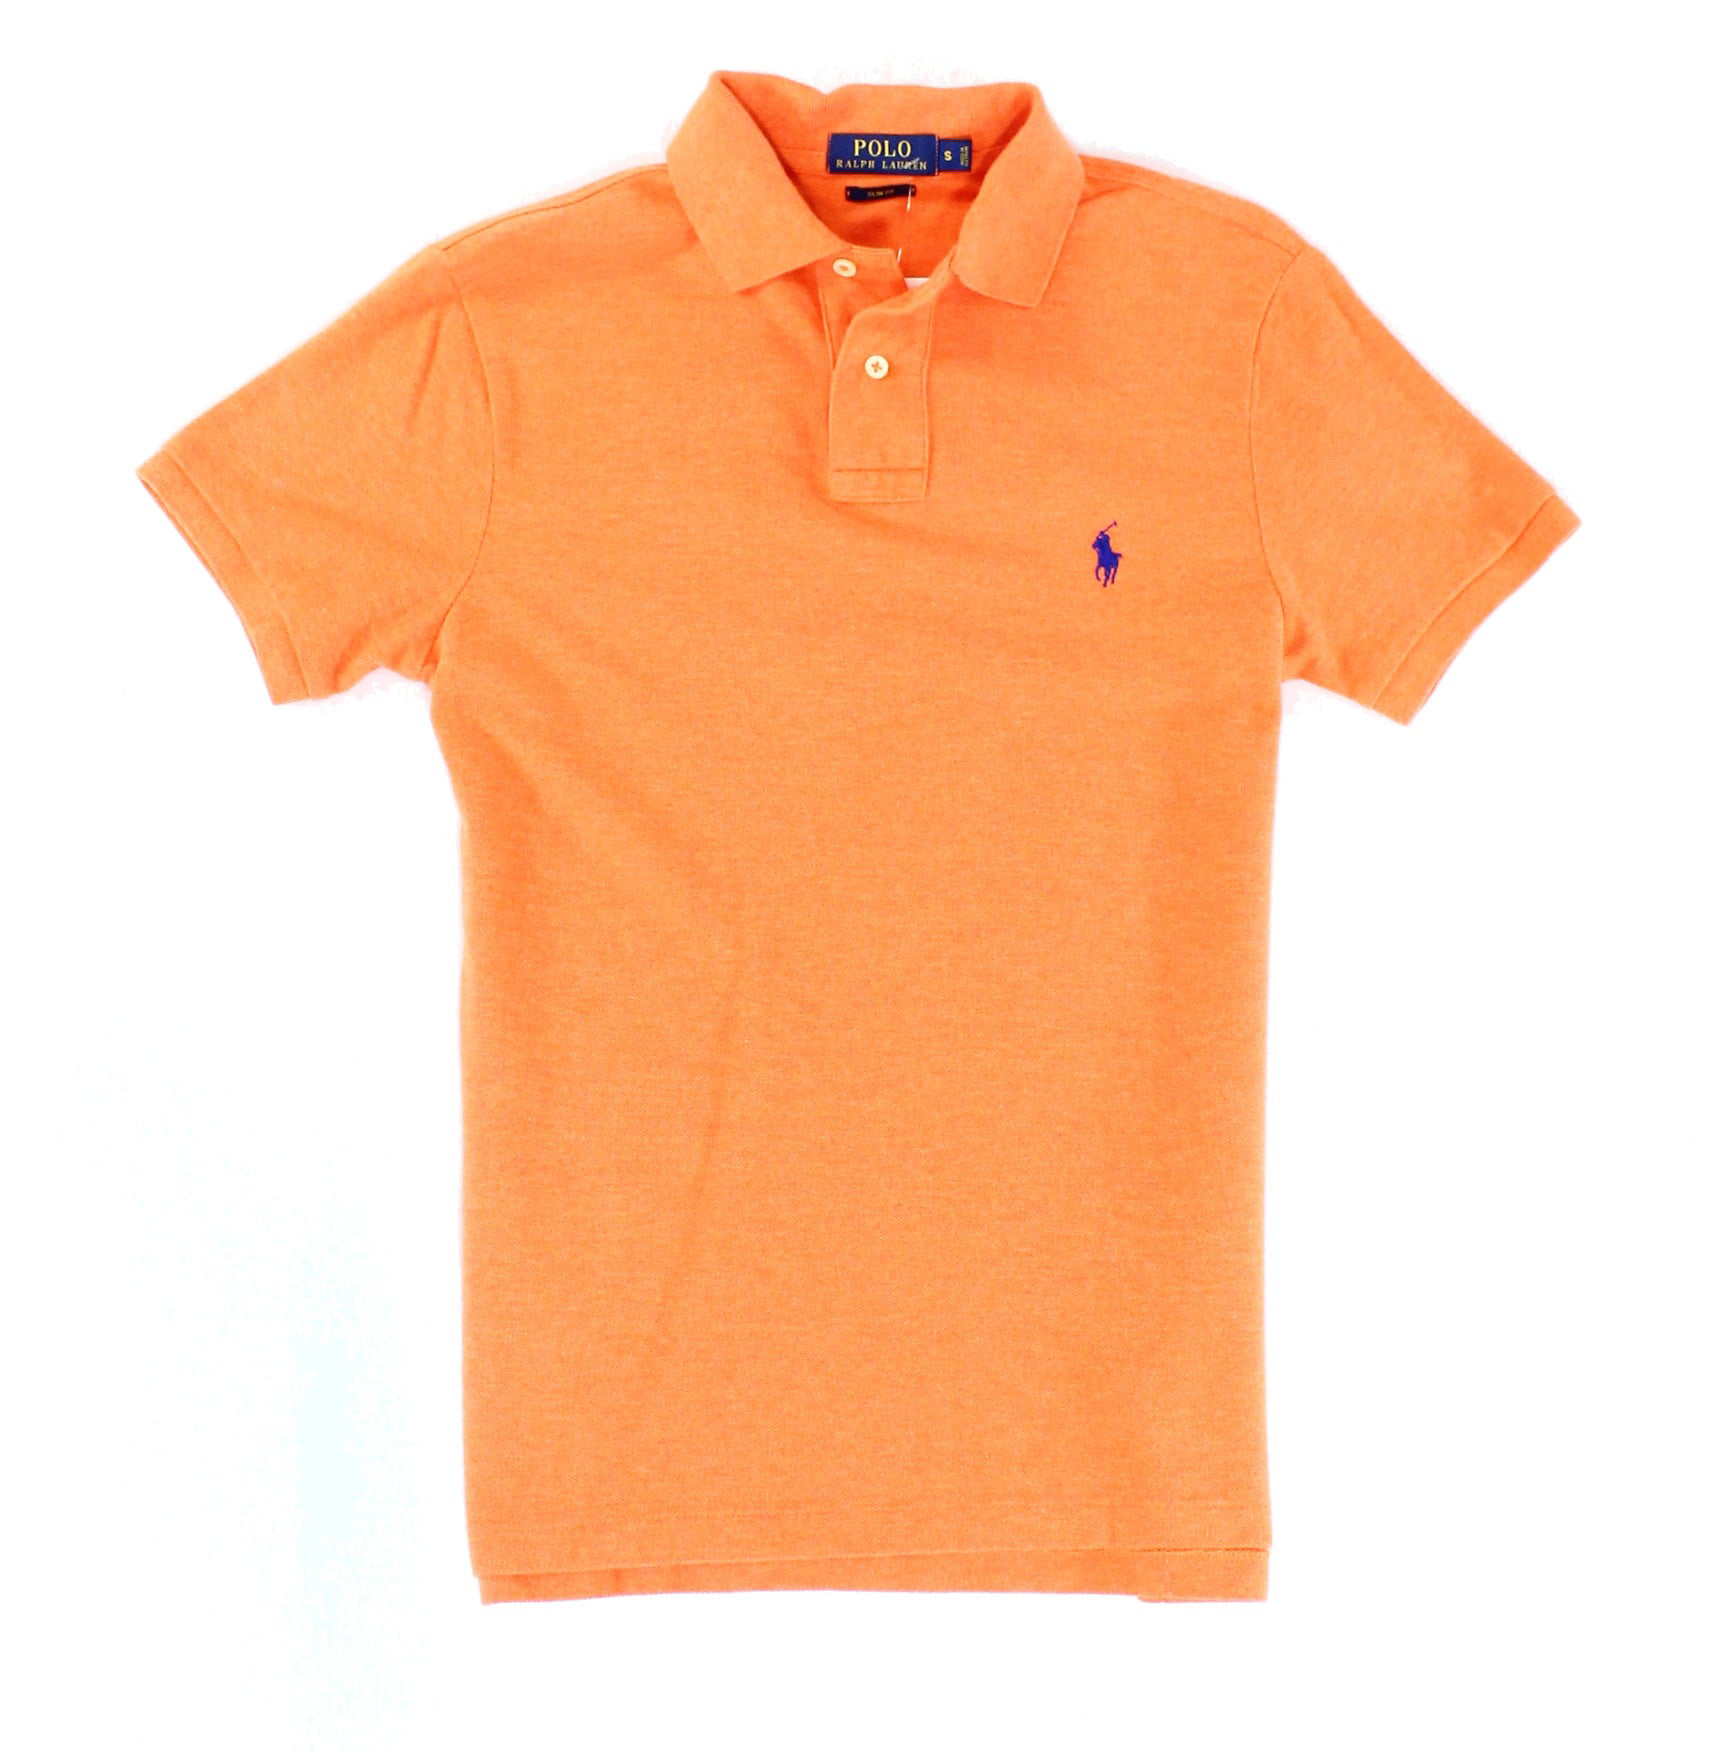 Polo Ralph Lauren - Polo Ralph Lauren NEW Orange Men Size Small S Slim